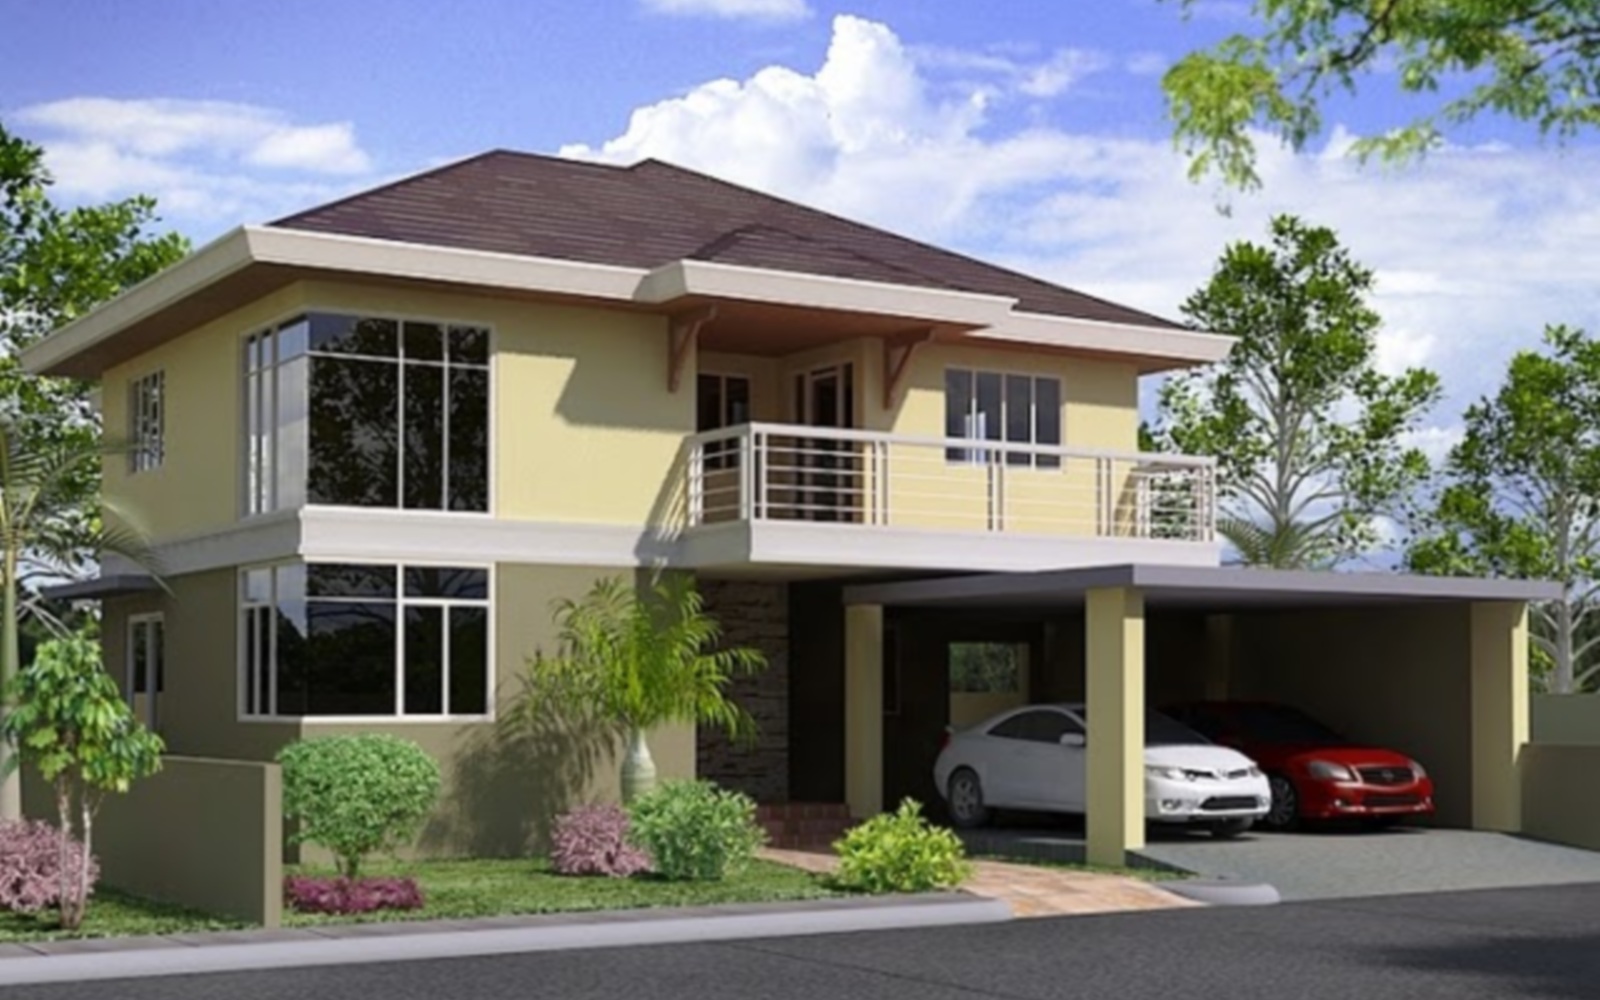 Image Two  Storey  House  Philippines  Joy Studio Design 